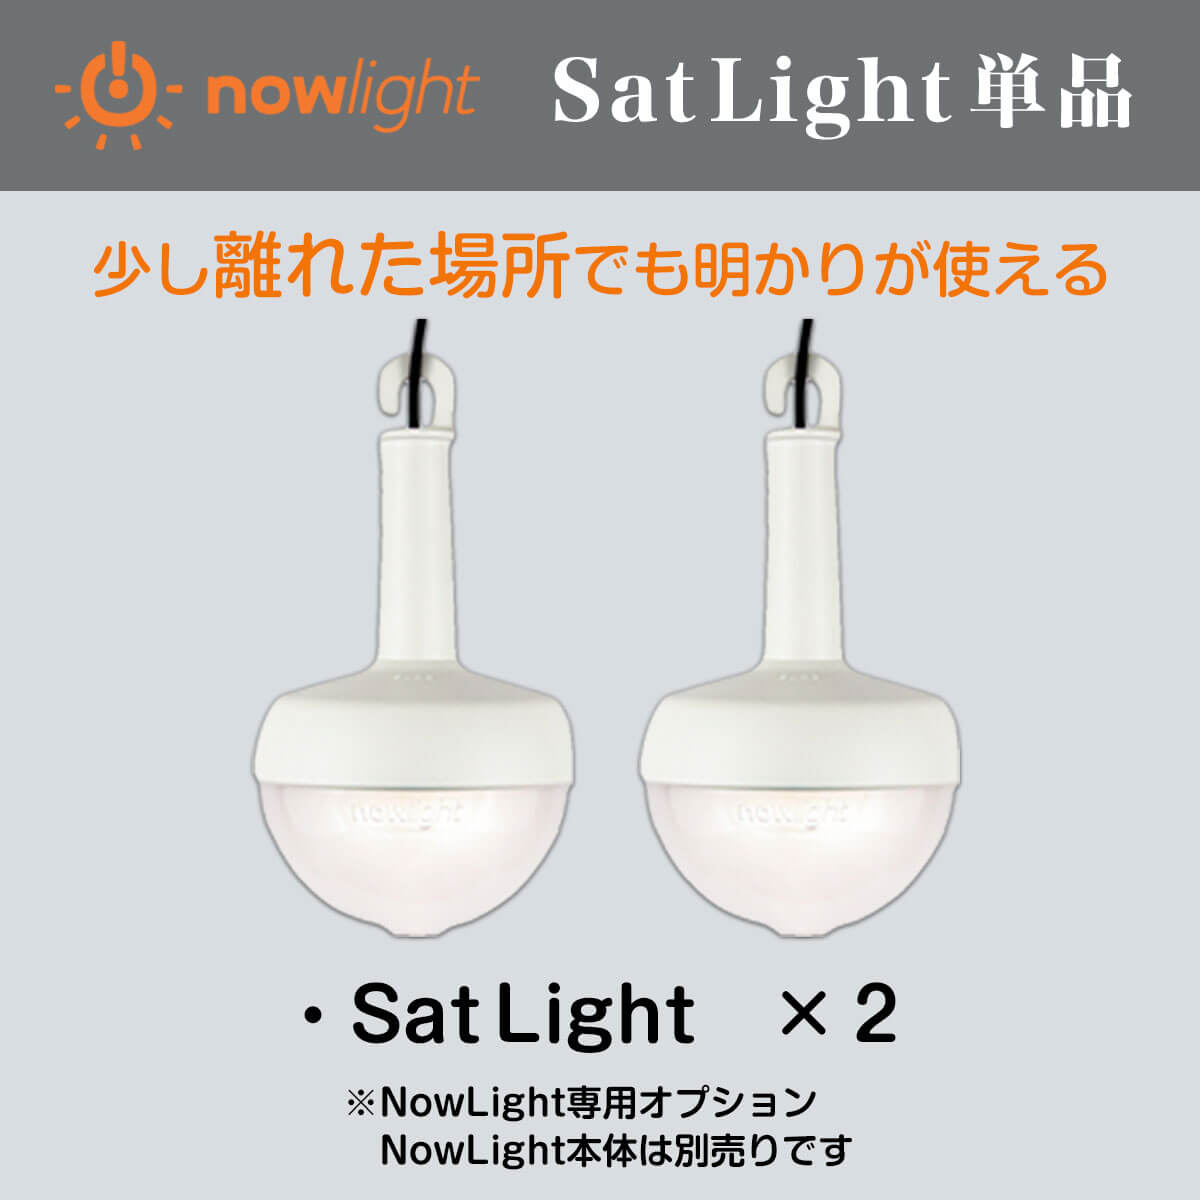 NowLight(ナウライト)専用オプション品SatLight(サットライト)